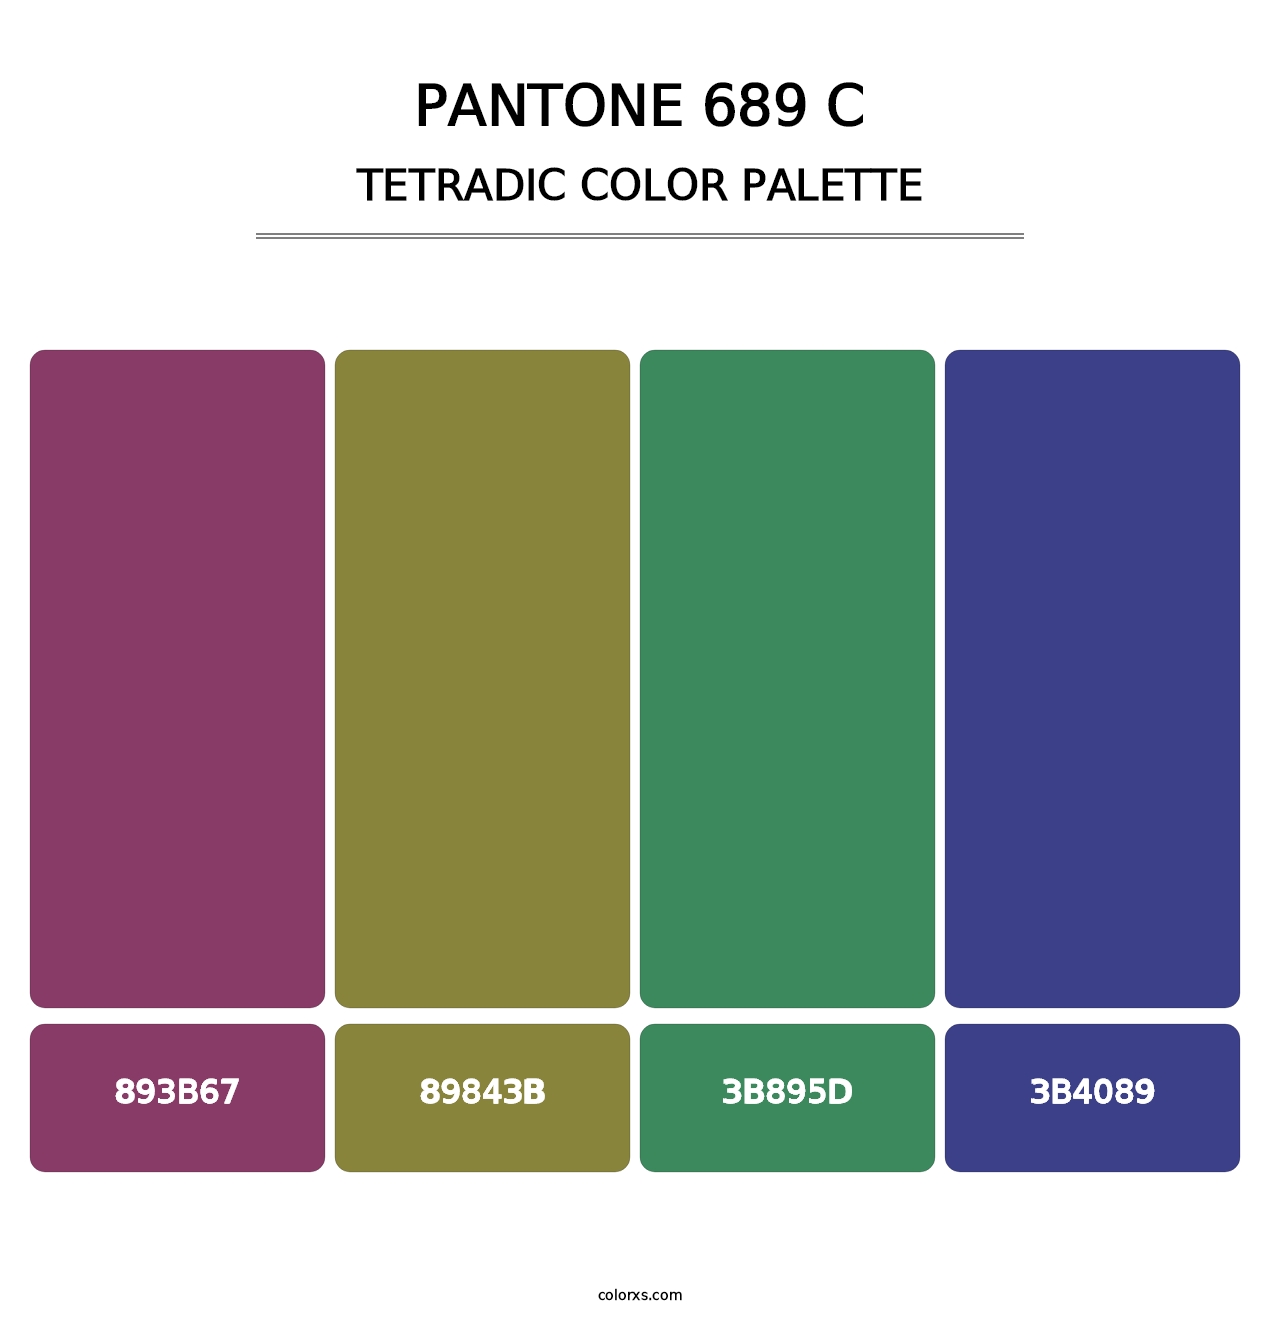 PANTONE 689 C - Tetradic Color Palette